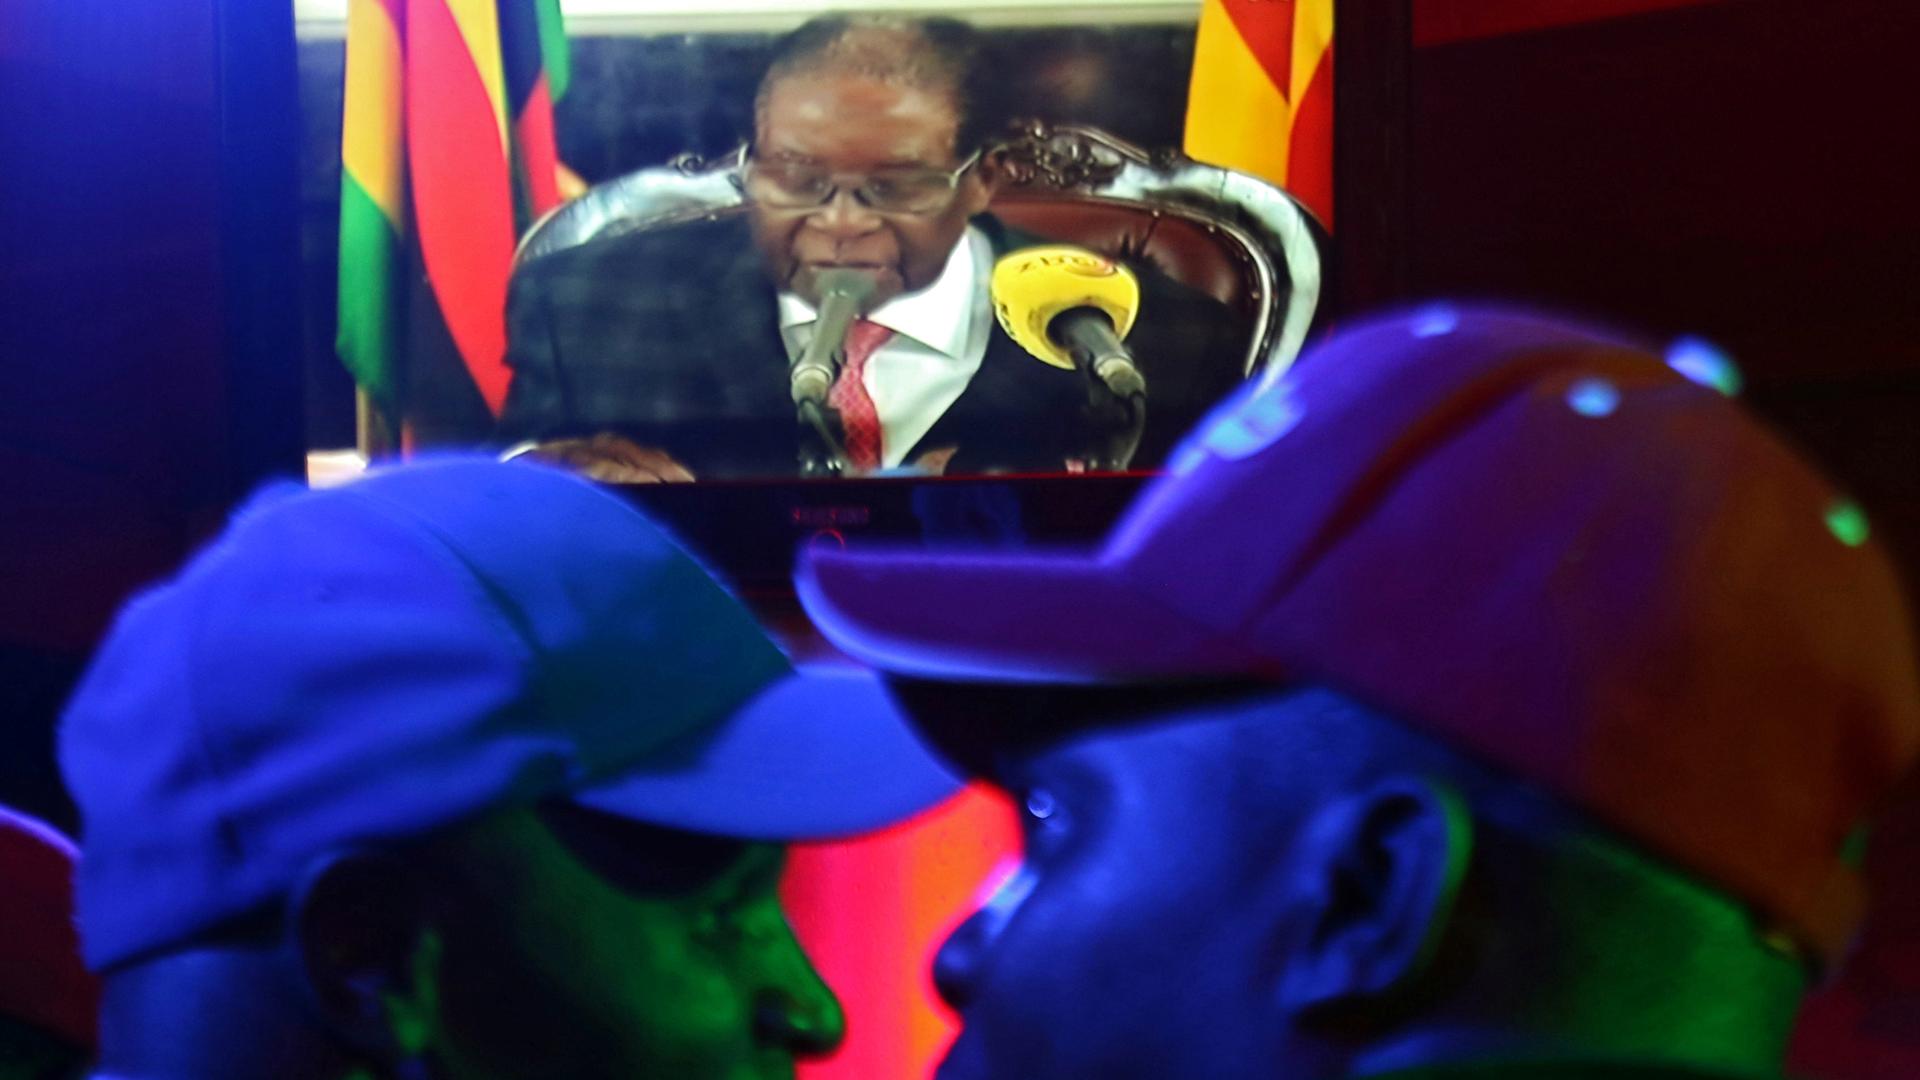 Two men in the foreground wearing baseball hats watch Zimbabwean President Robert Mugabe on a TV.